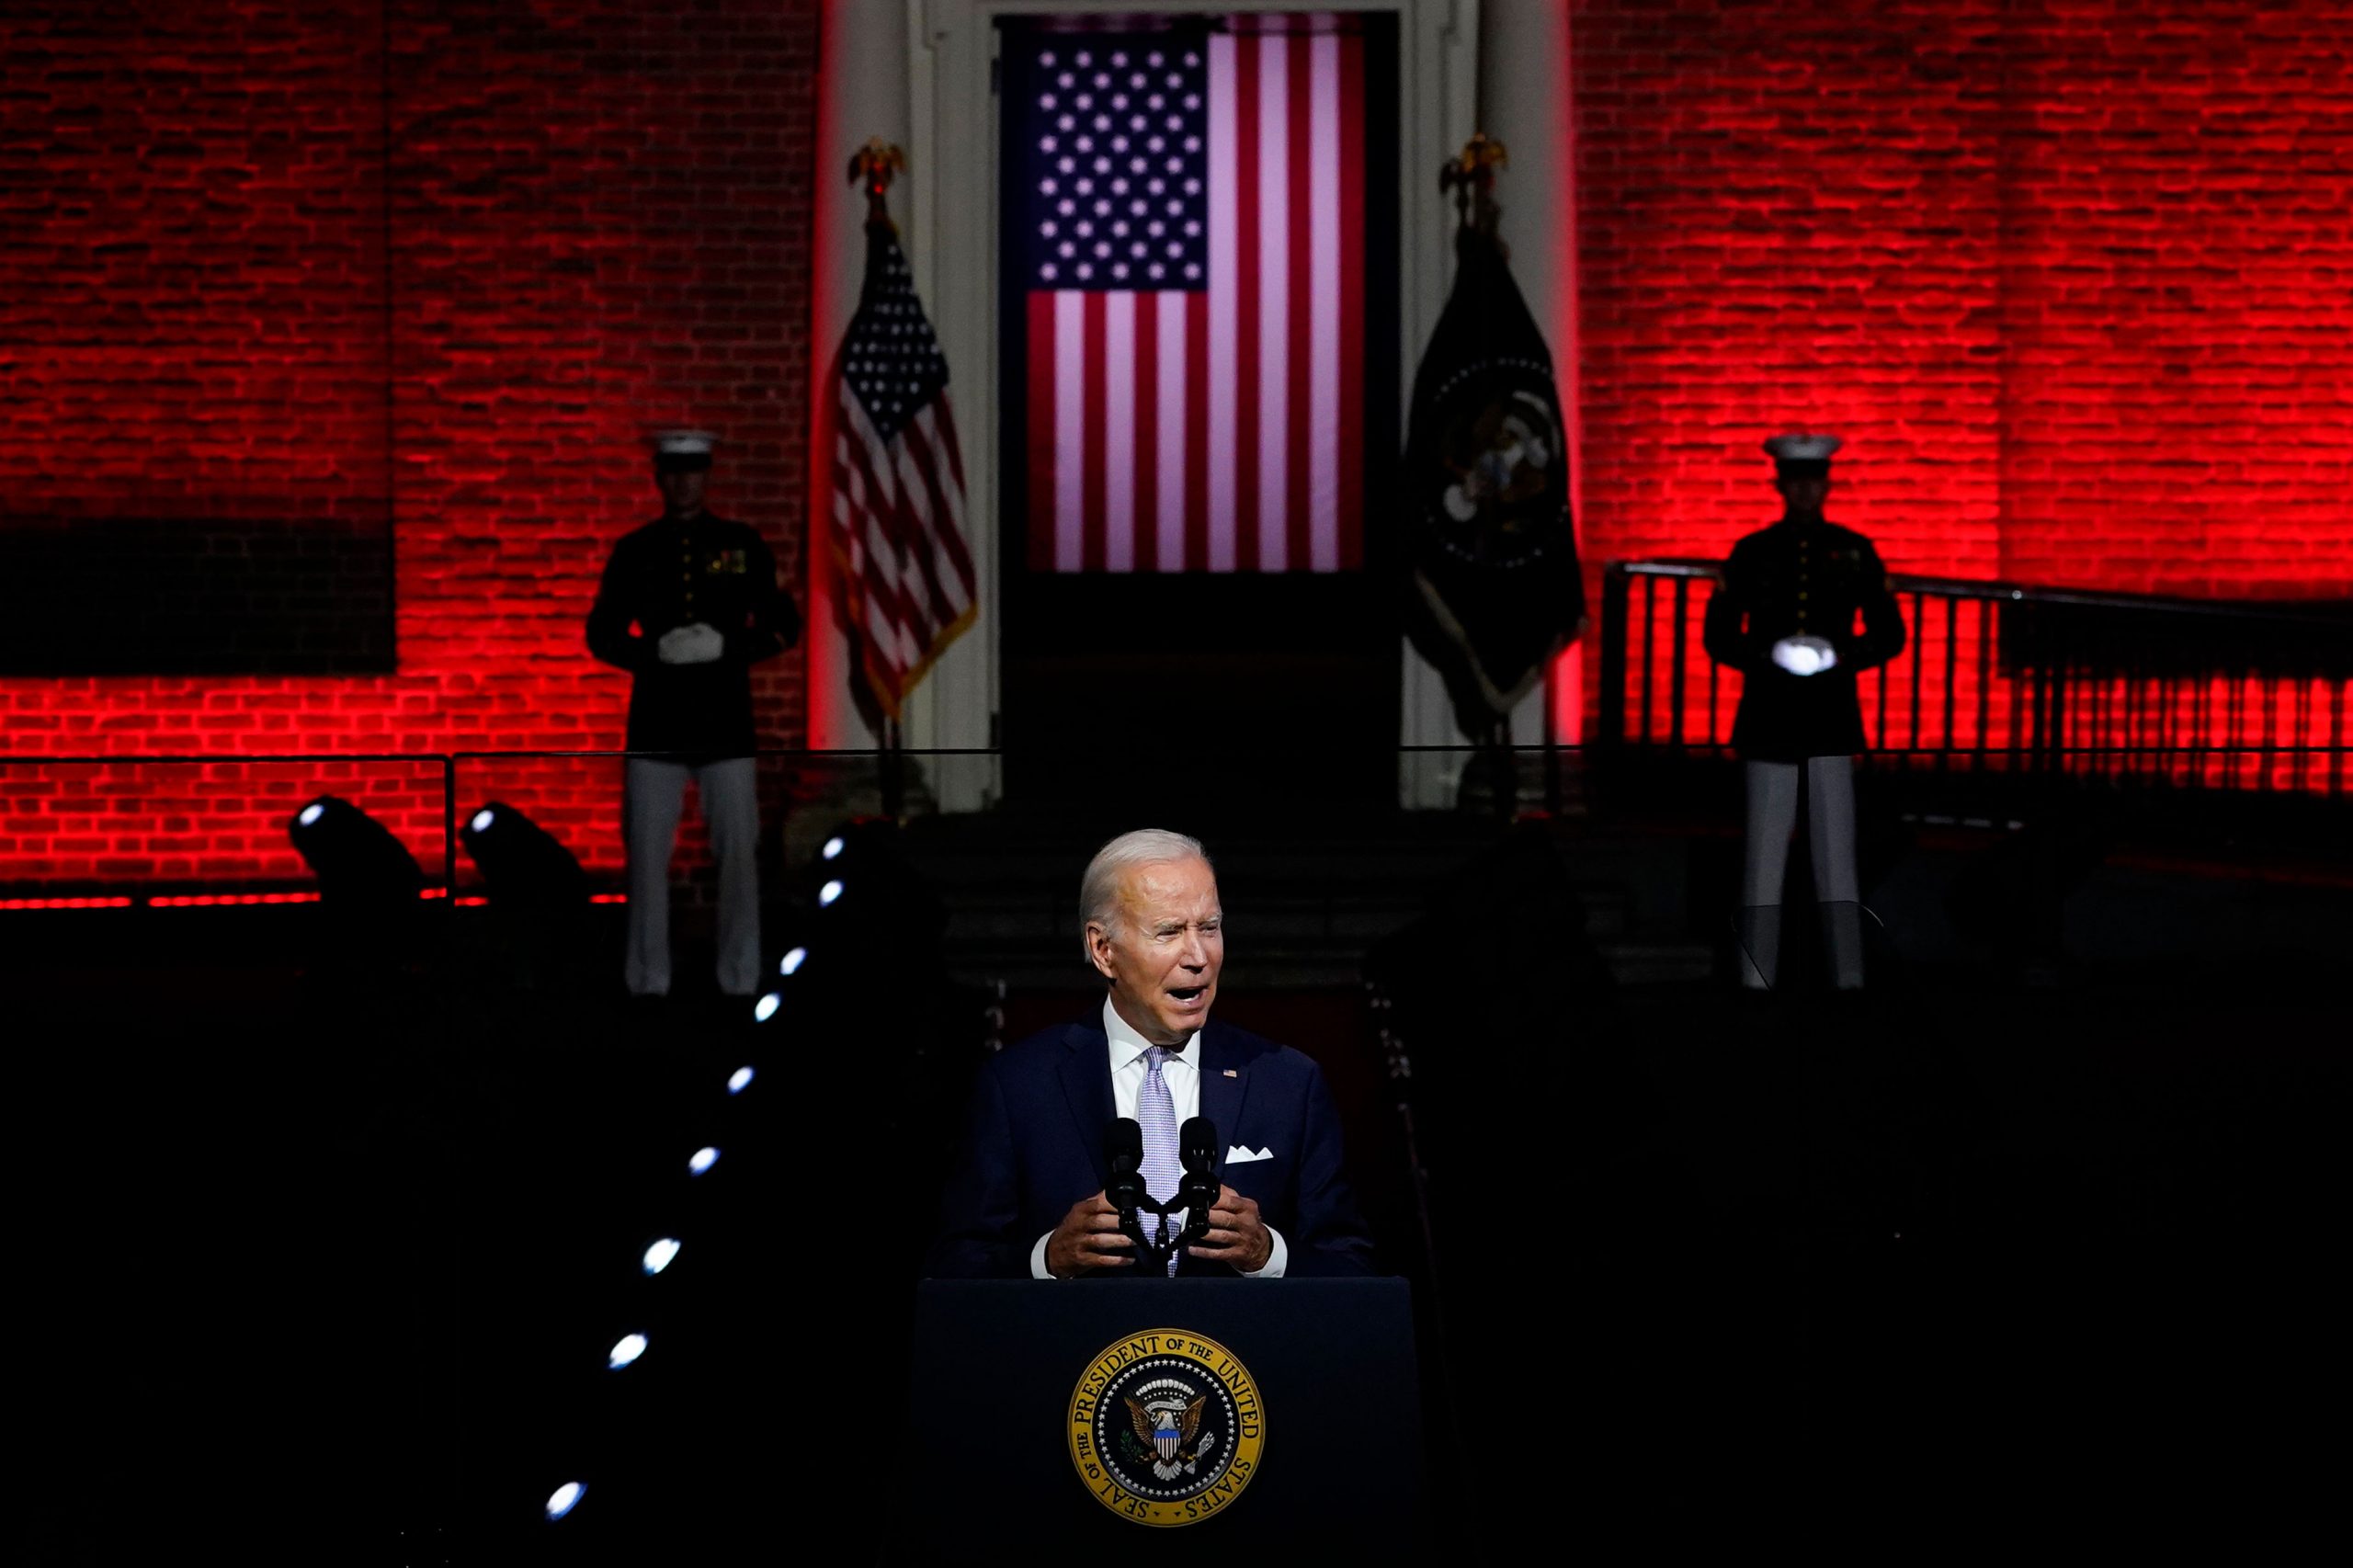 Joe Biden primetime speech: Can the US president have Marines present?